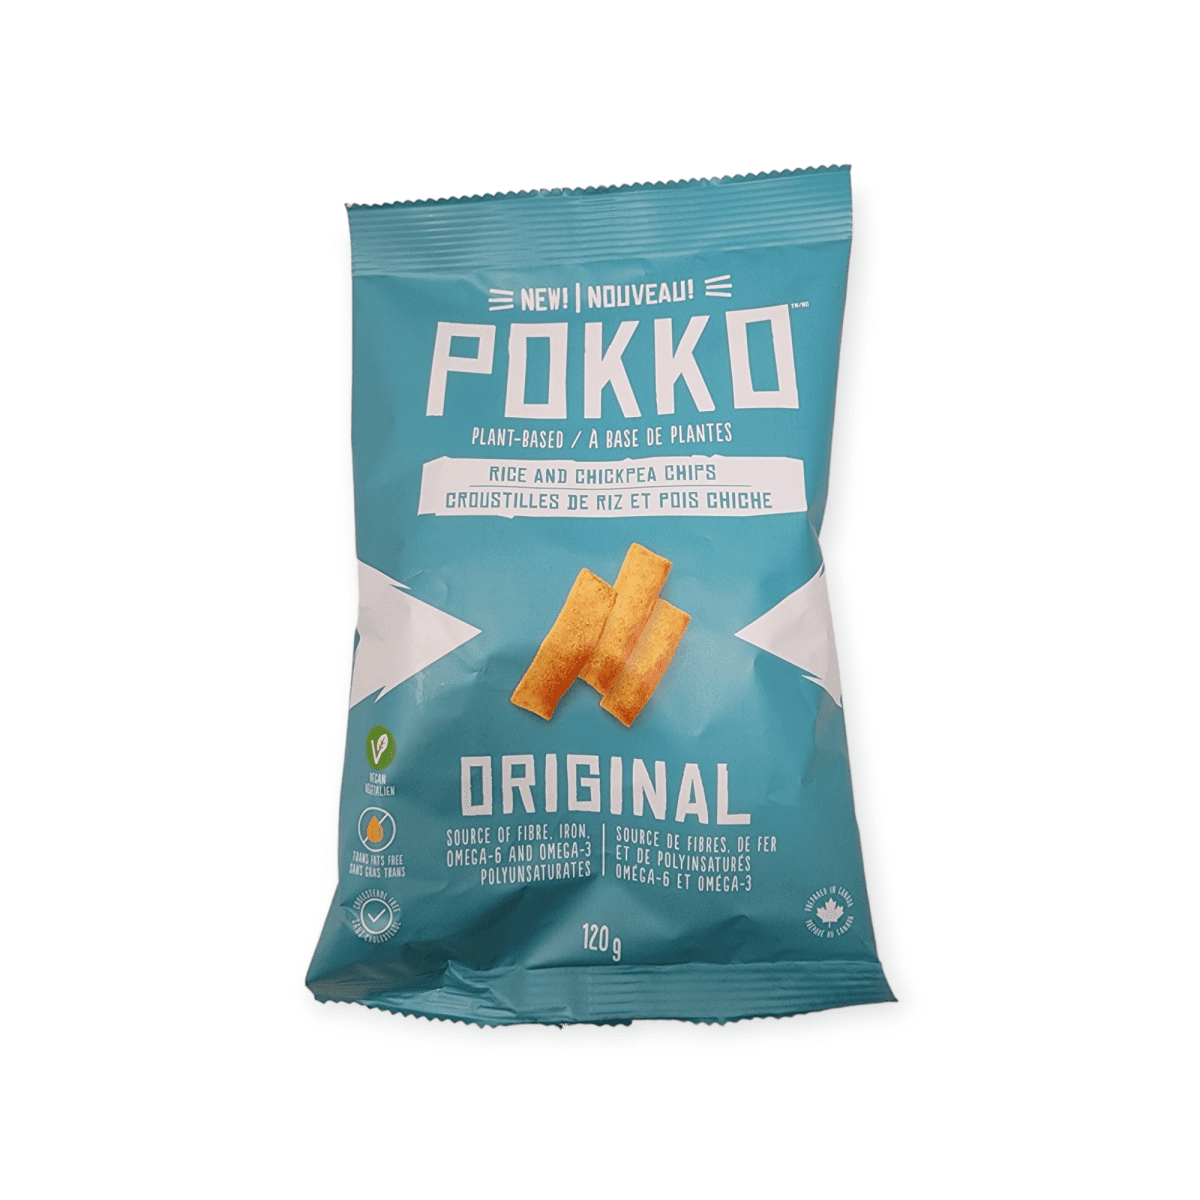 Pokko Plant-Based Rice & Chickpea Chips Original (120g)